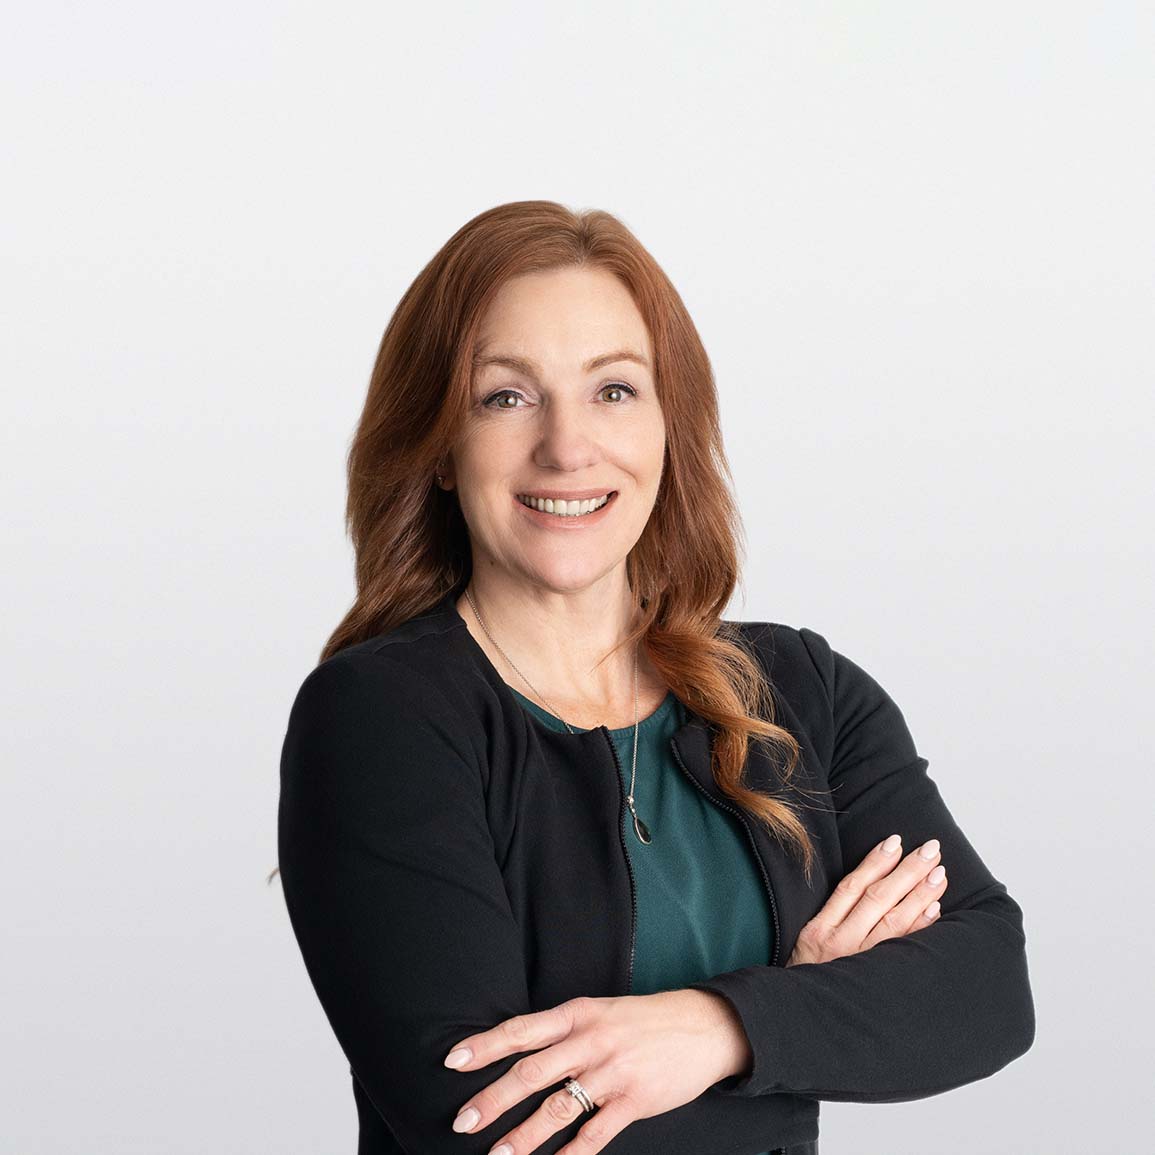 Image of Sherry Davis Senior Financial Advisor on white background